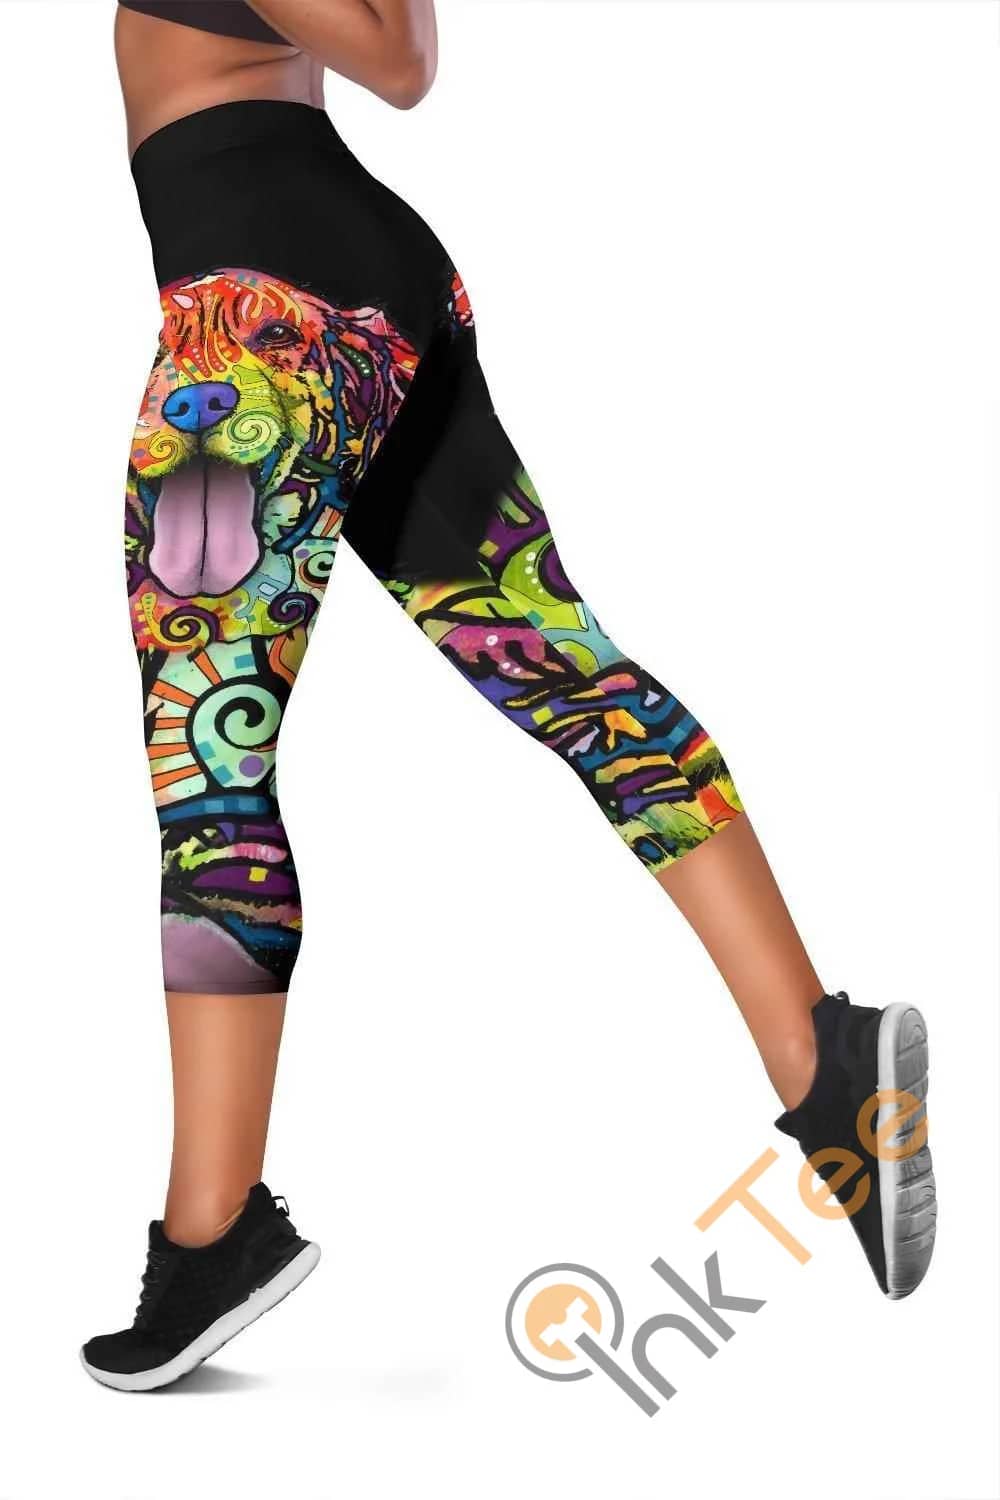 Golden Retriever Capri 3D All Over Print For Yoga Fitness #2 Women'S Capris - Golden Retriever Capri Leggings #2